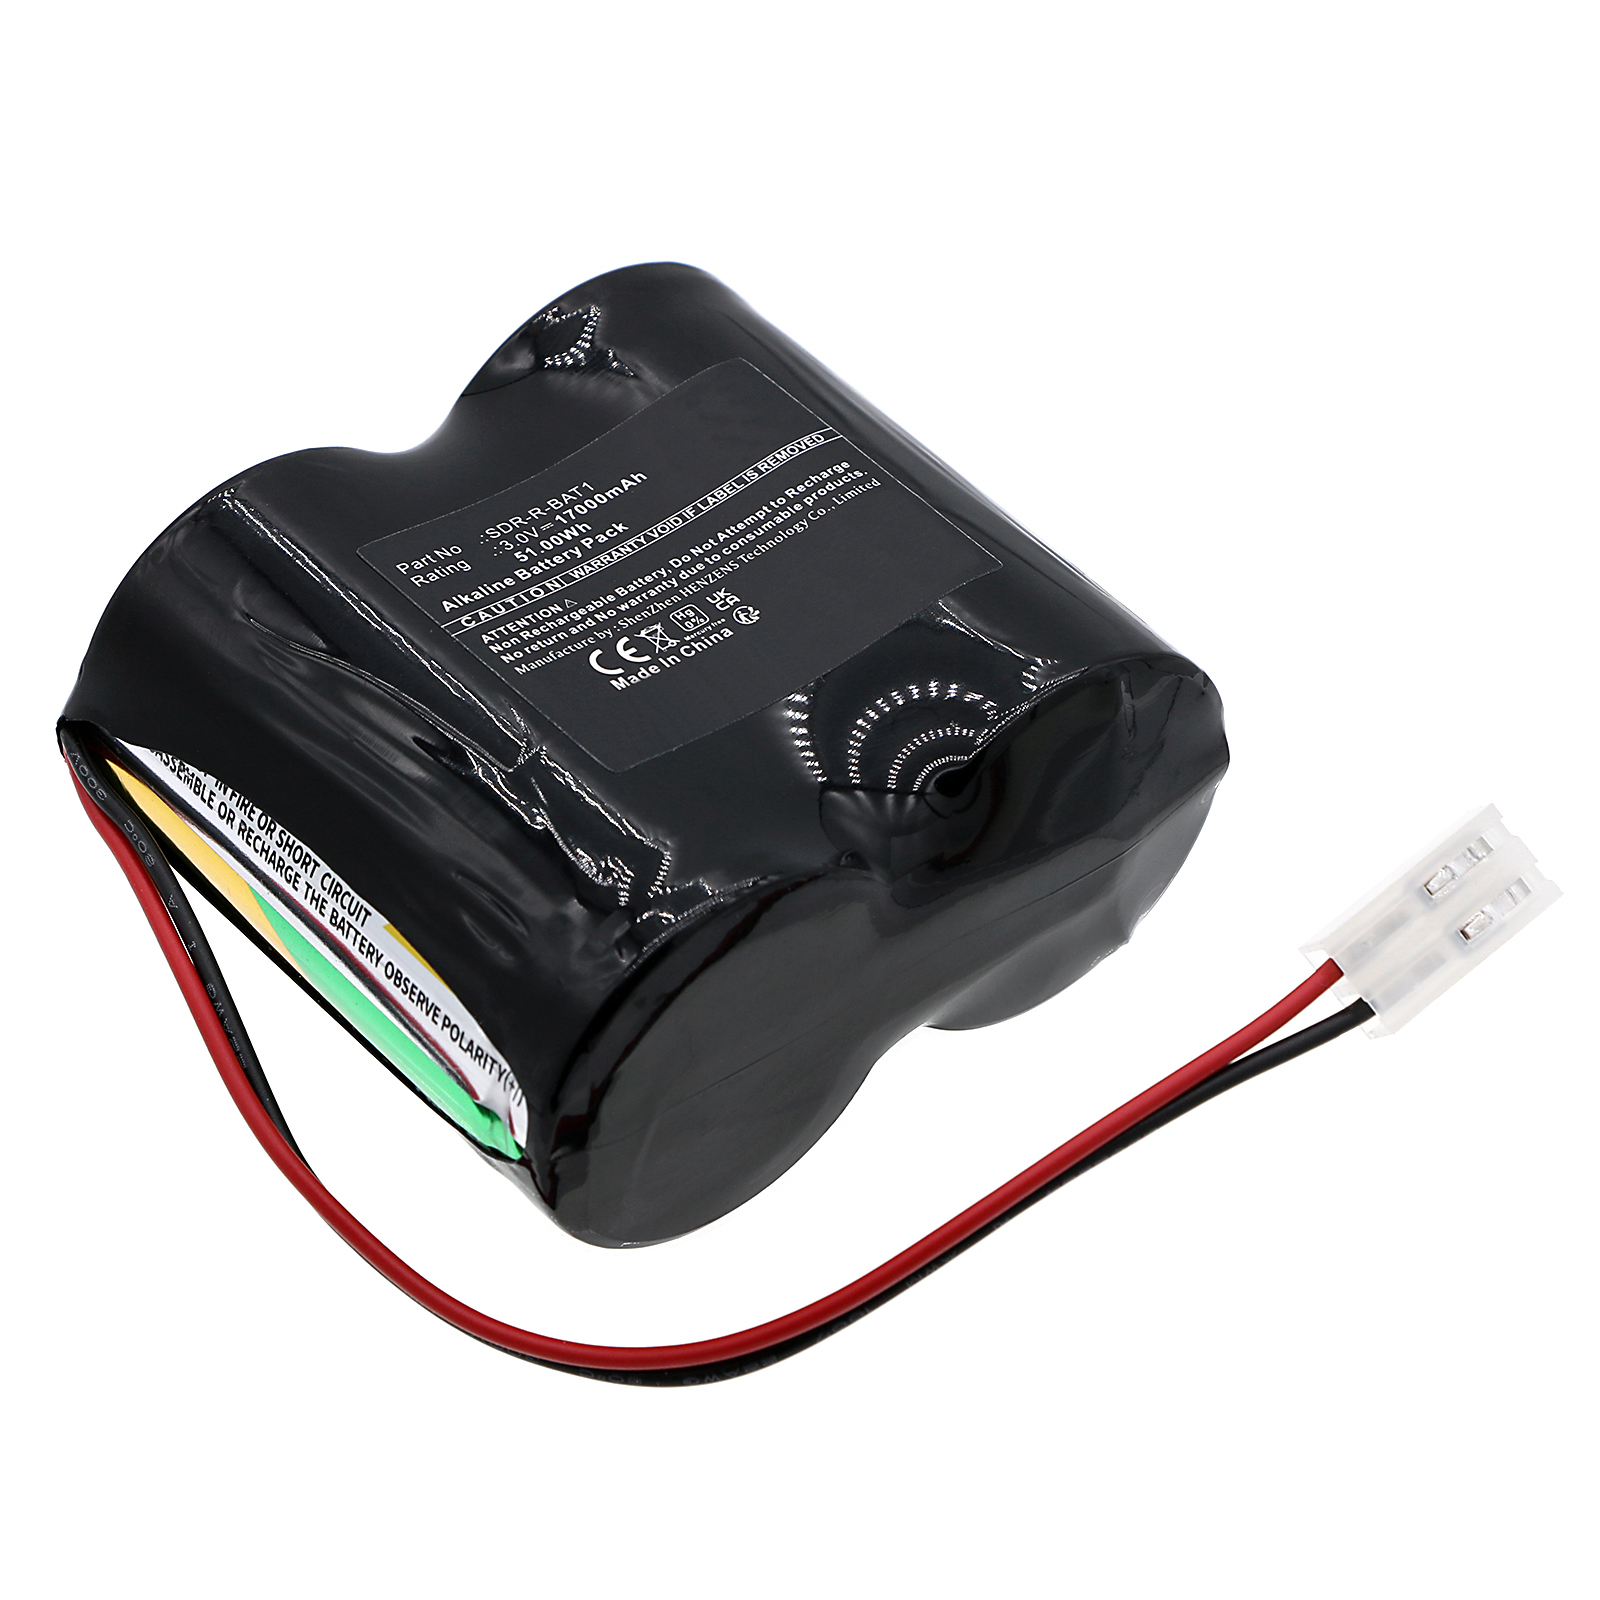 Synergy Digital Alarm System Battery, Compatible with Eaton SDR-R-BAT1 Alarm System Battery (Alkaline, 3V, 17000mAh)